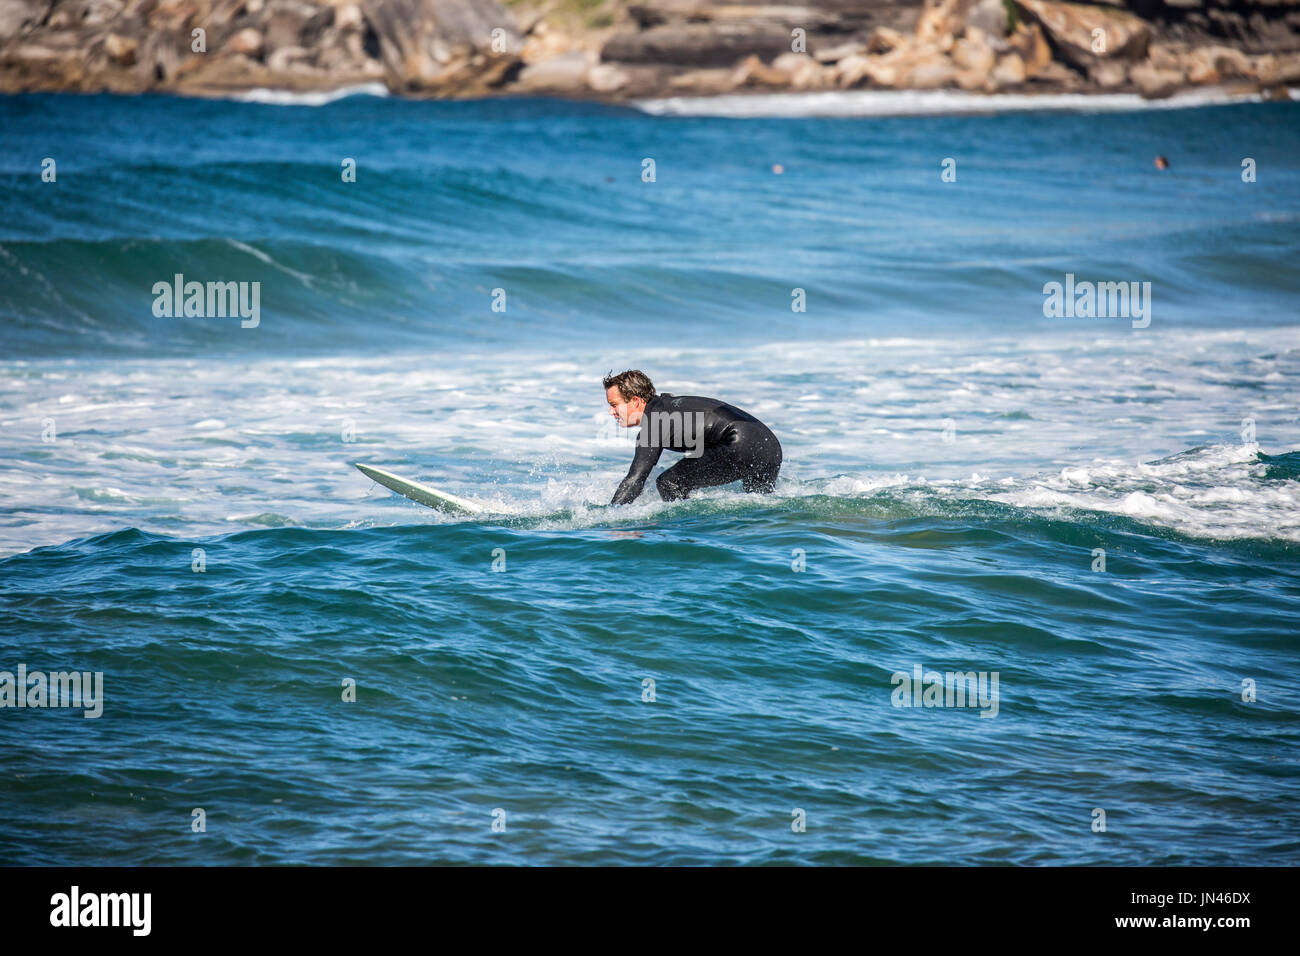 Australian man enjoying surfing on a Sydney beach in Australia Stock Photo